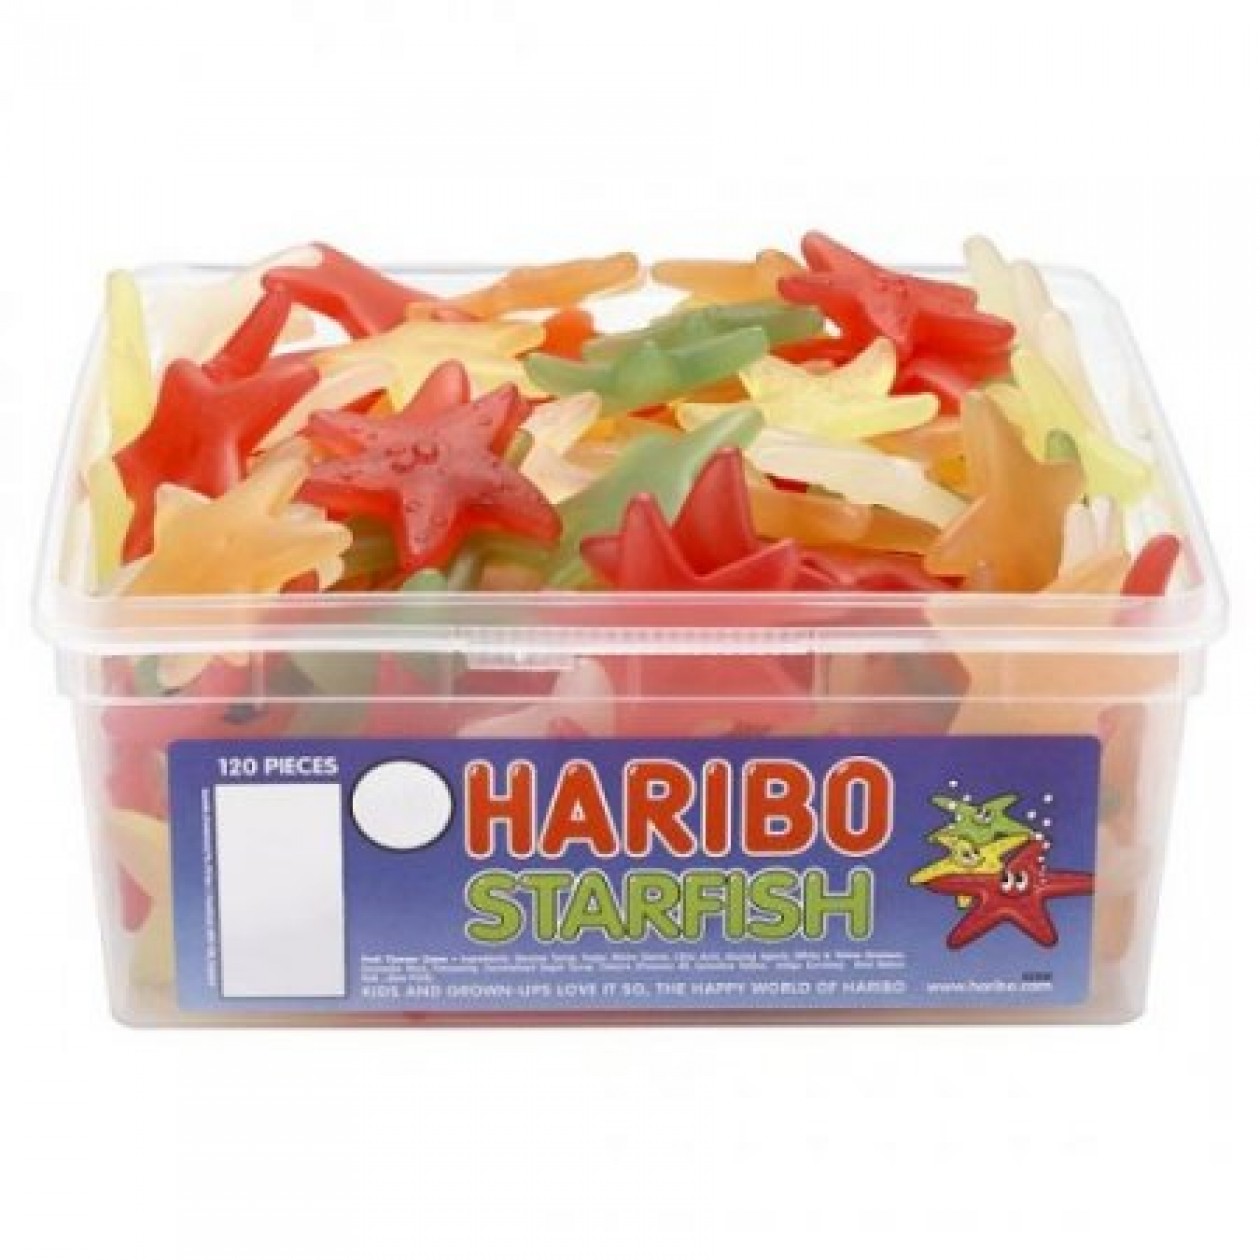 Haribo Starfish 120 pieces 912g